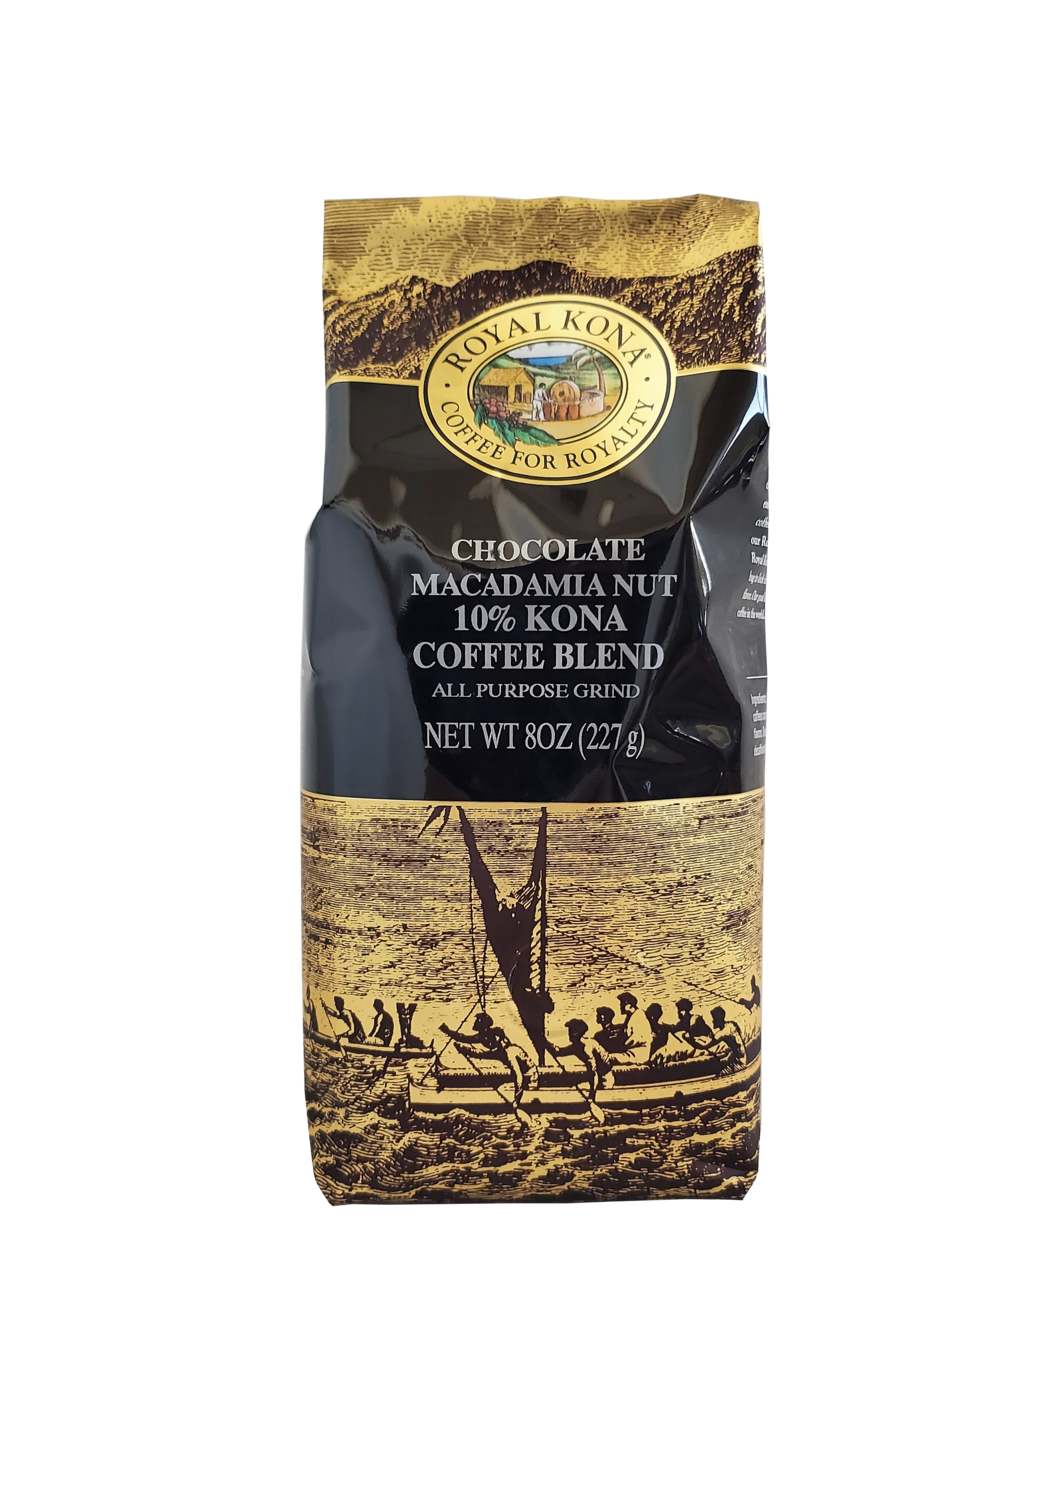 Royal Kona Coffee - Chocolate Macadamia Nut 10% Kona Coffee Blend 8 oz